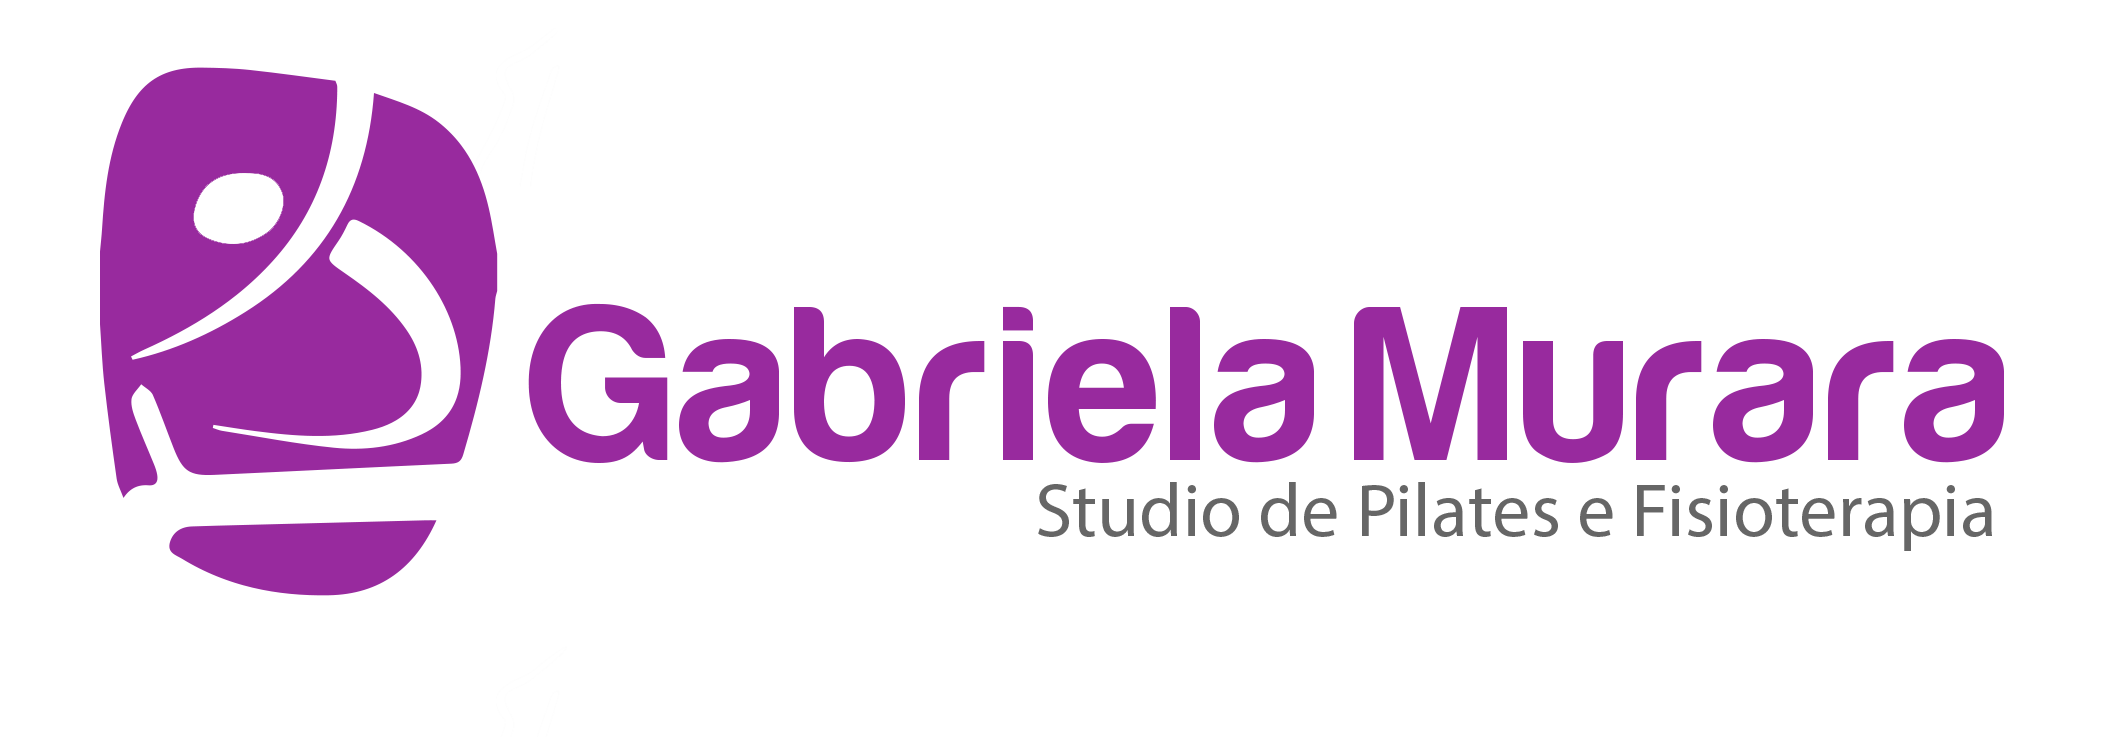 STUDIO DE PILATES GABRIELA MURARA